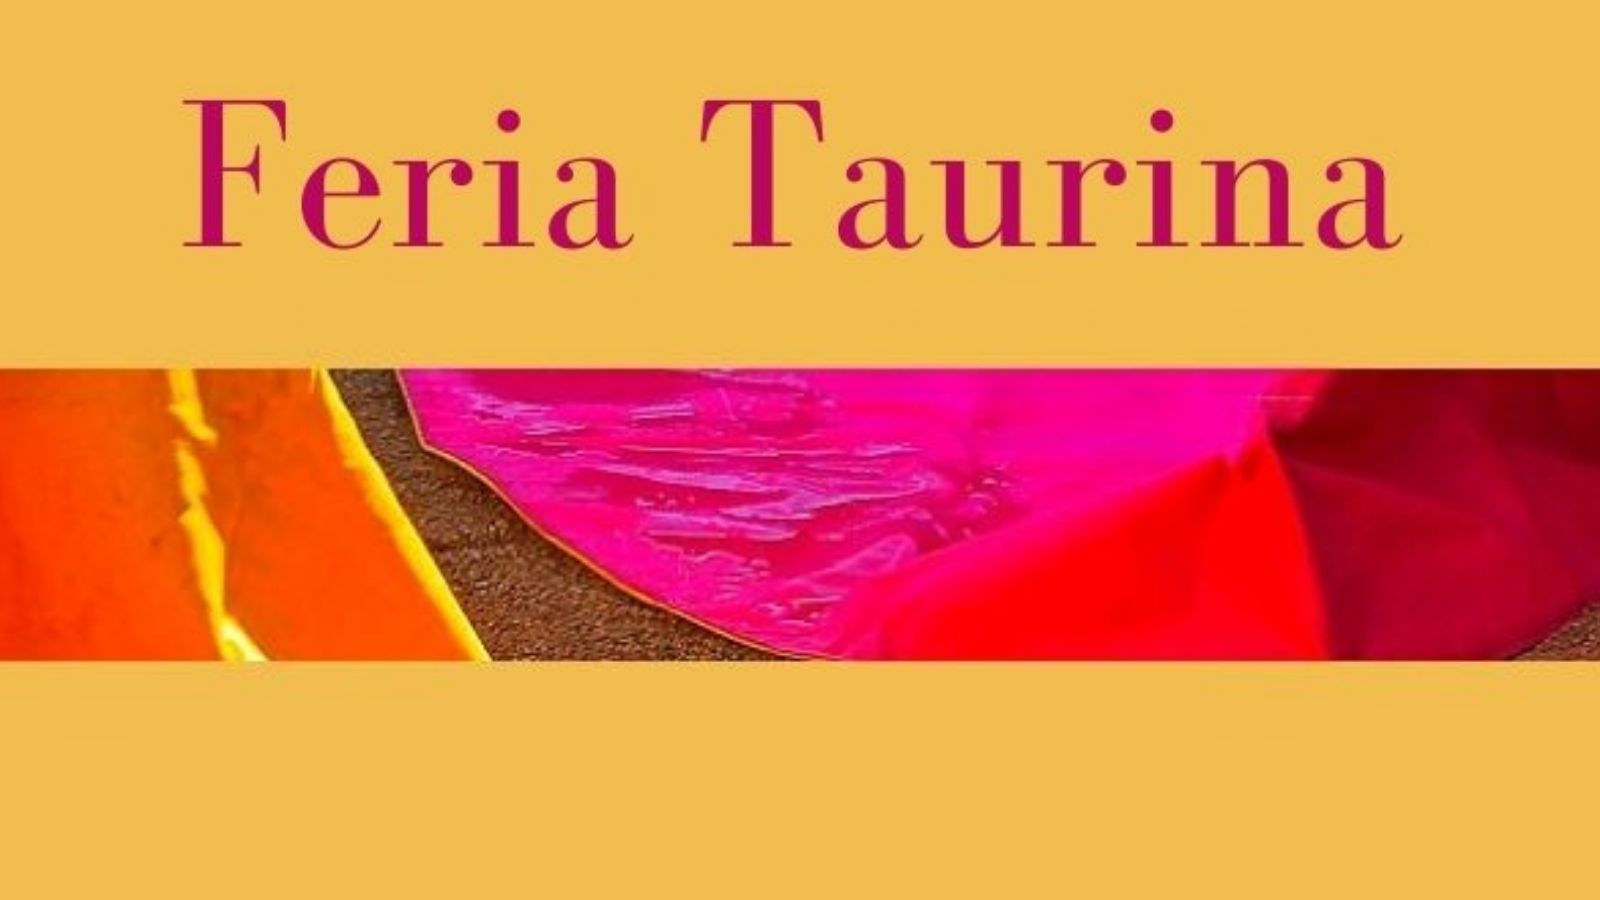 Feria Taurina. Desencajonada y recortes